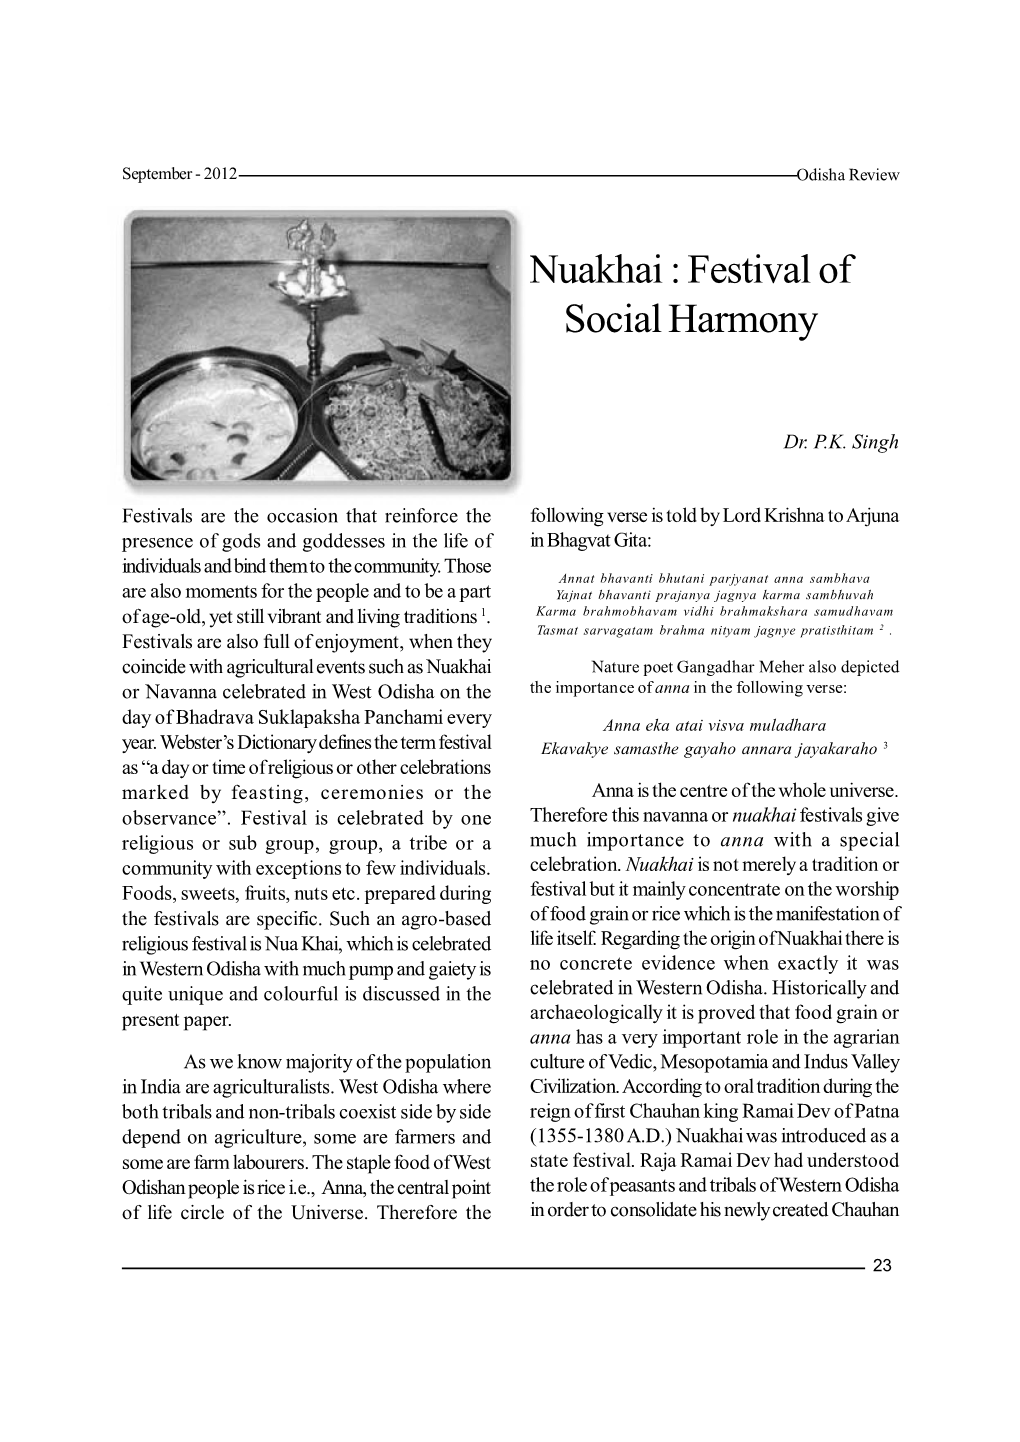 Nuakhai : Festival of Social Harmony